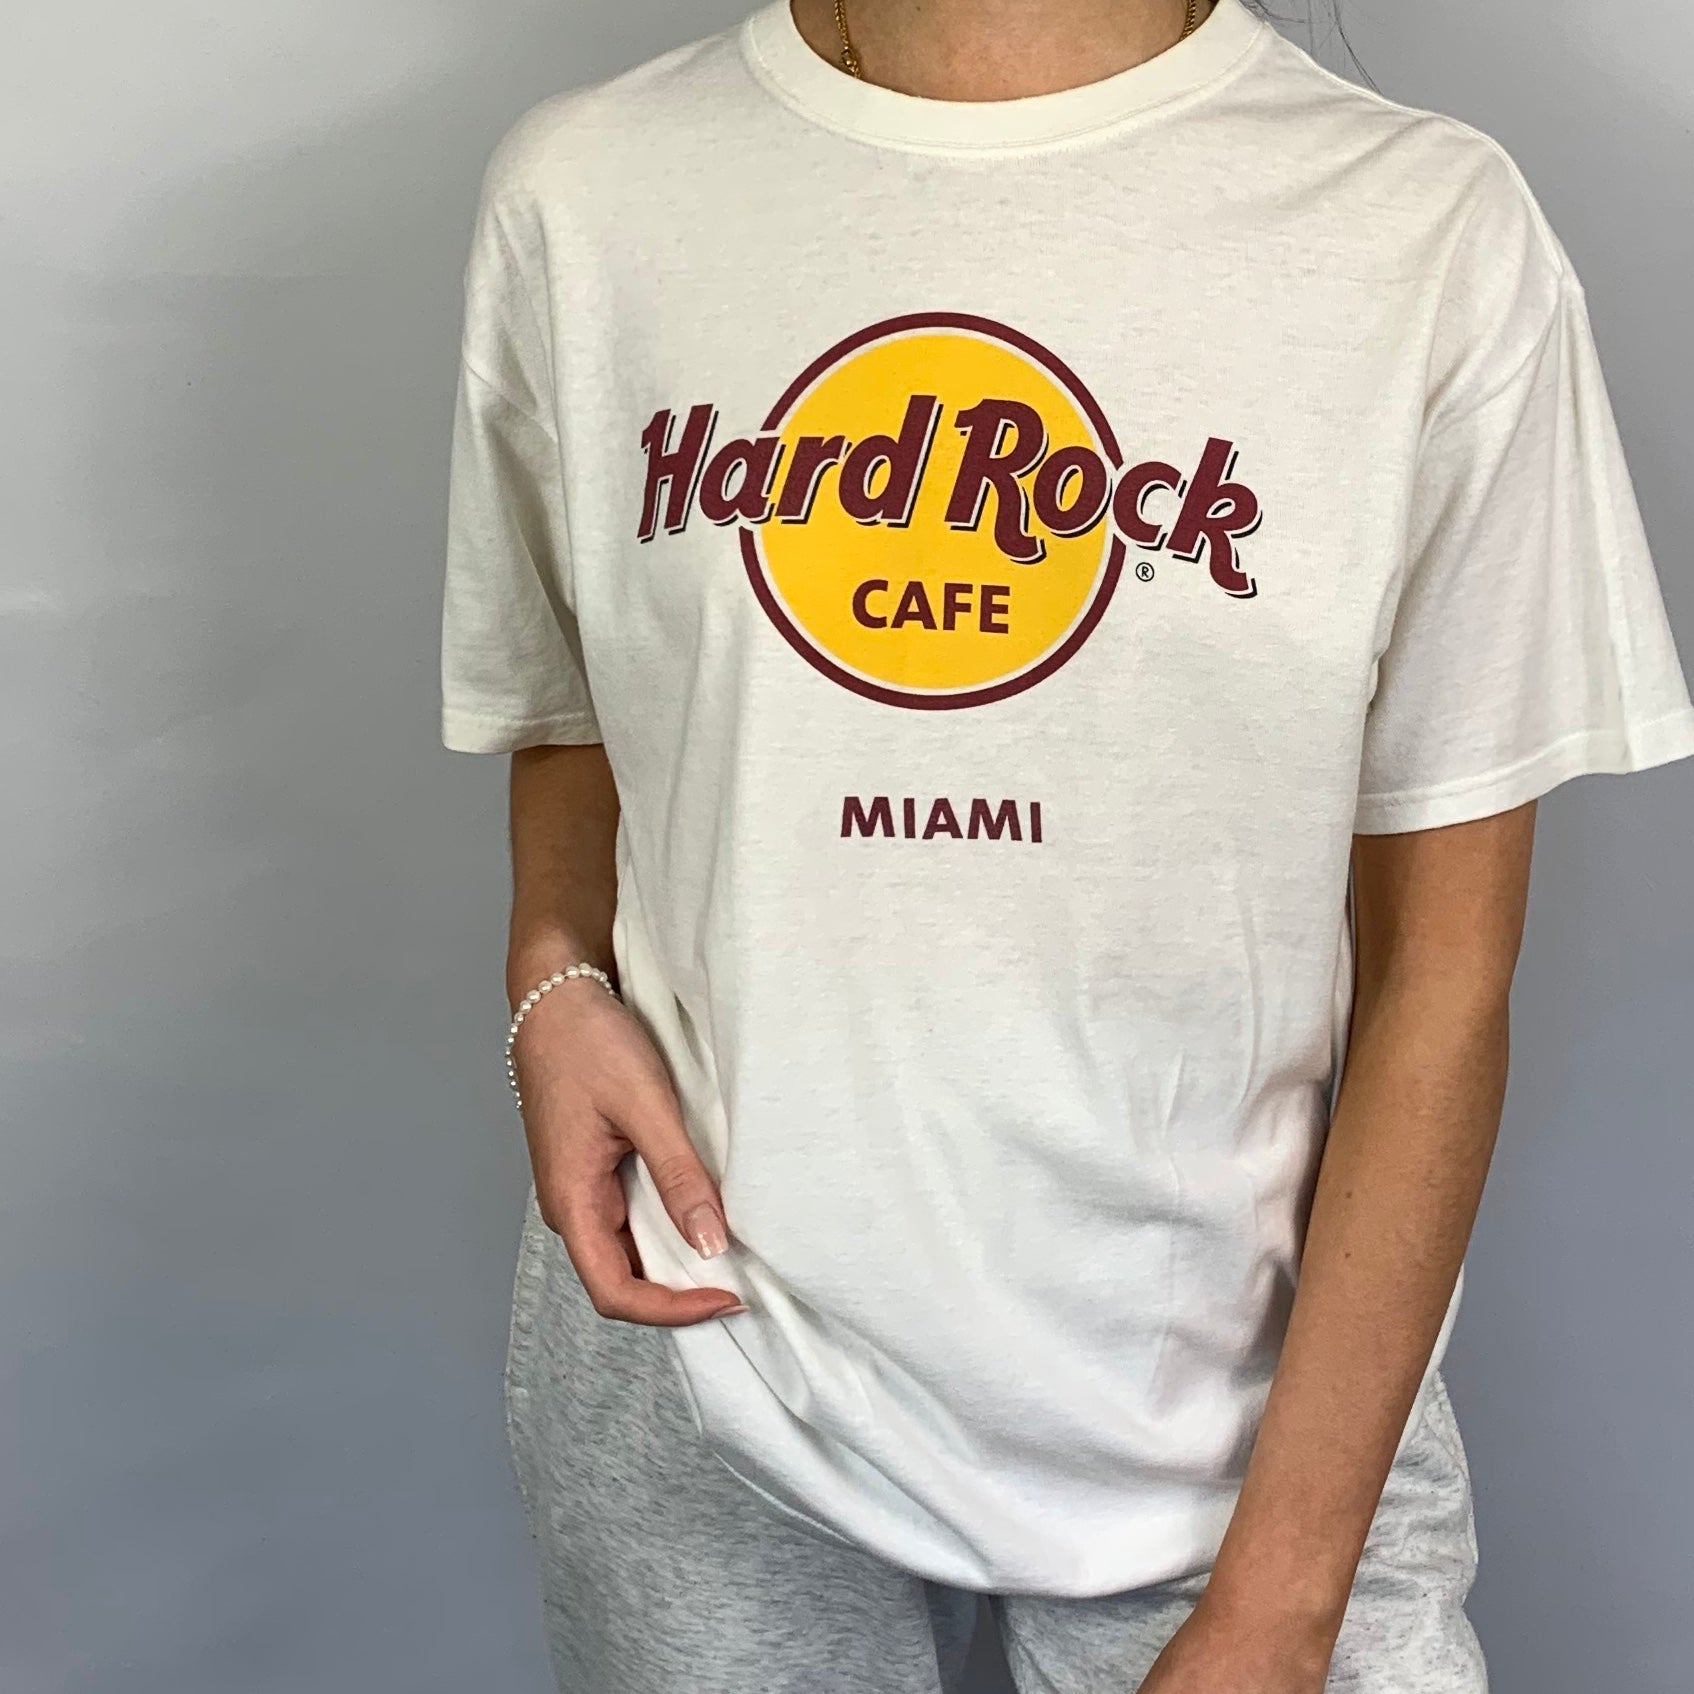 VINTAGE HARD ROCK CAFE Miami T-SHIRT - WOMEN'S Large/ Men's Small